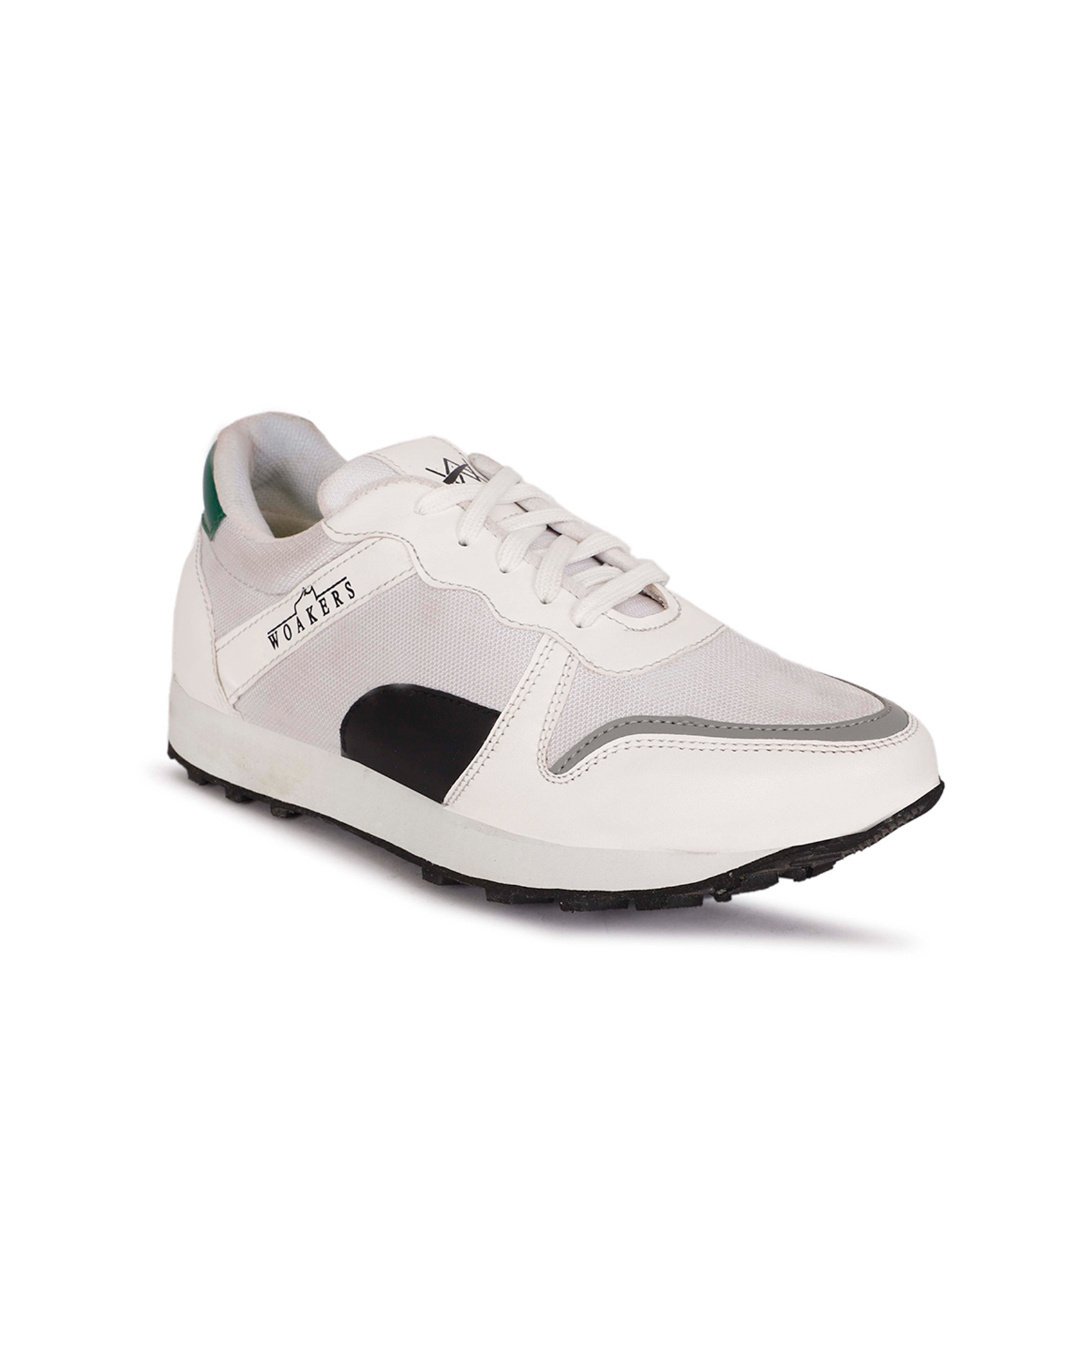 Shop Men's White Sports Shoes-Back